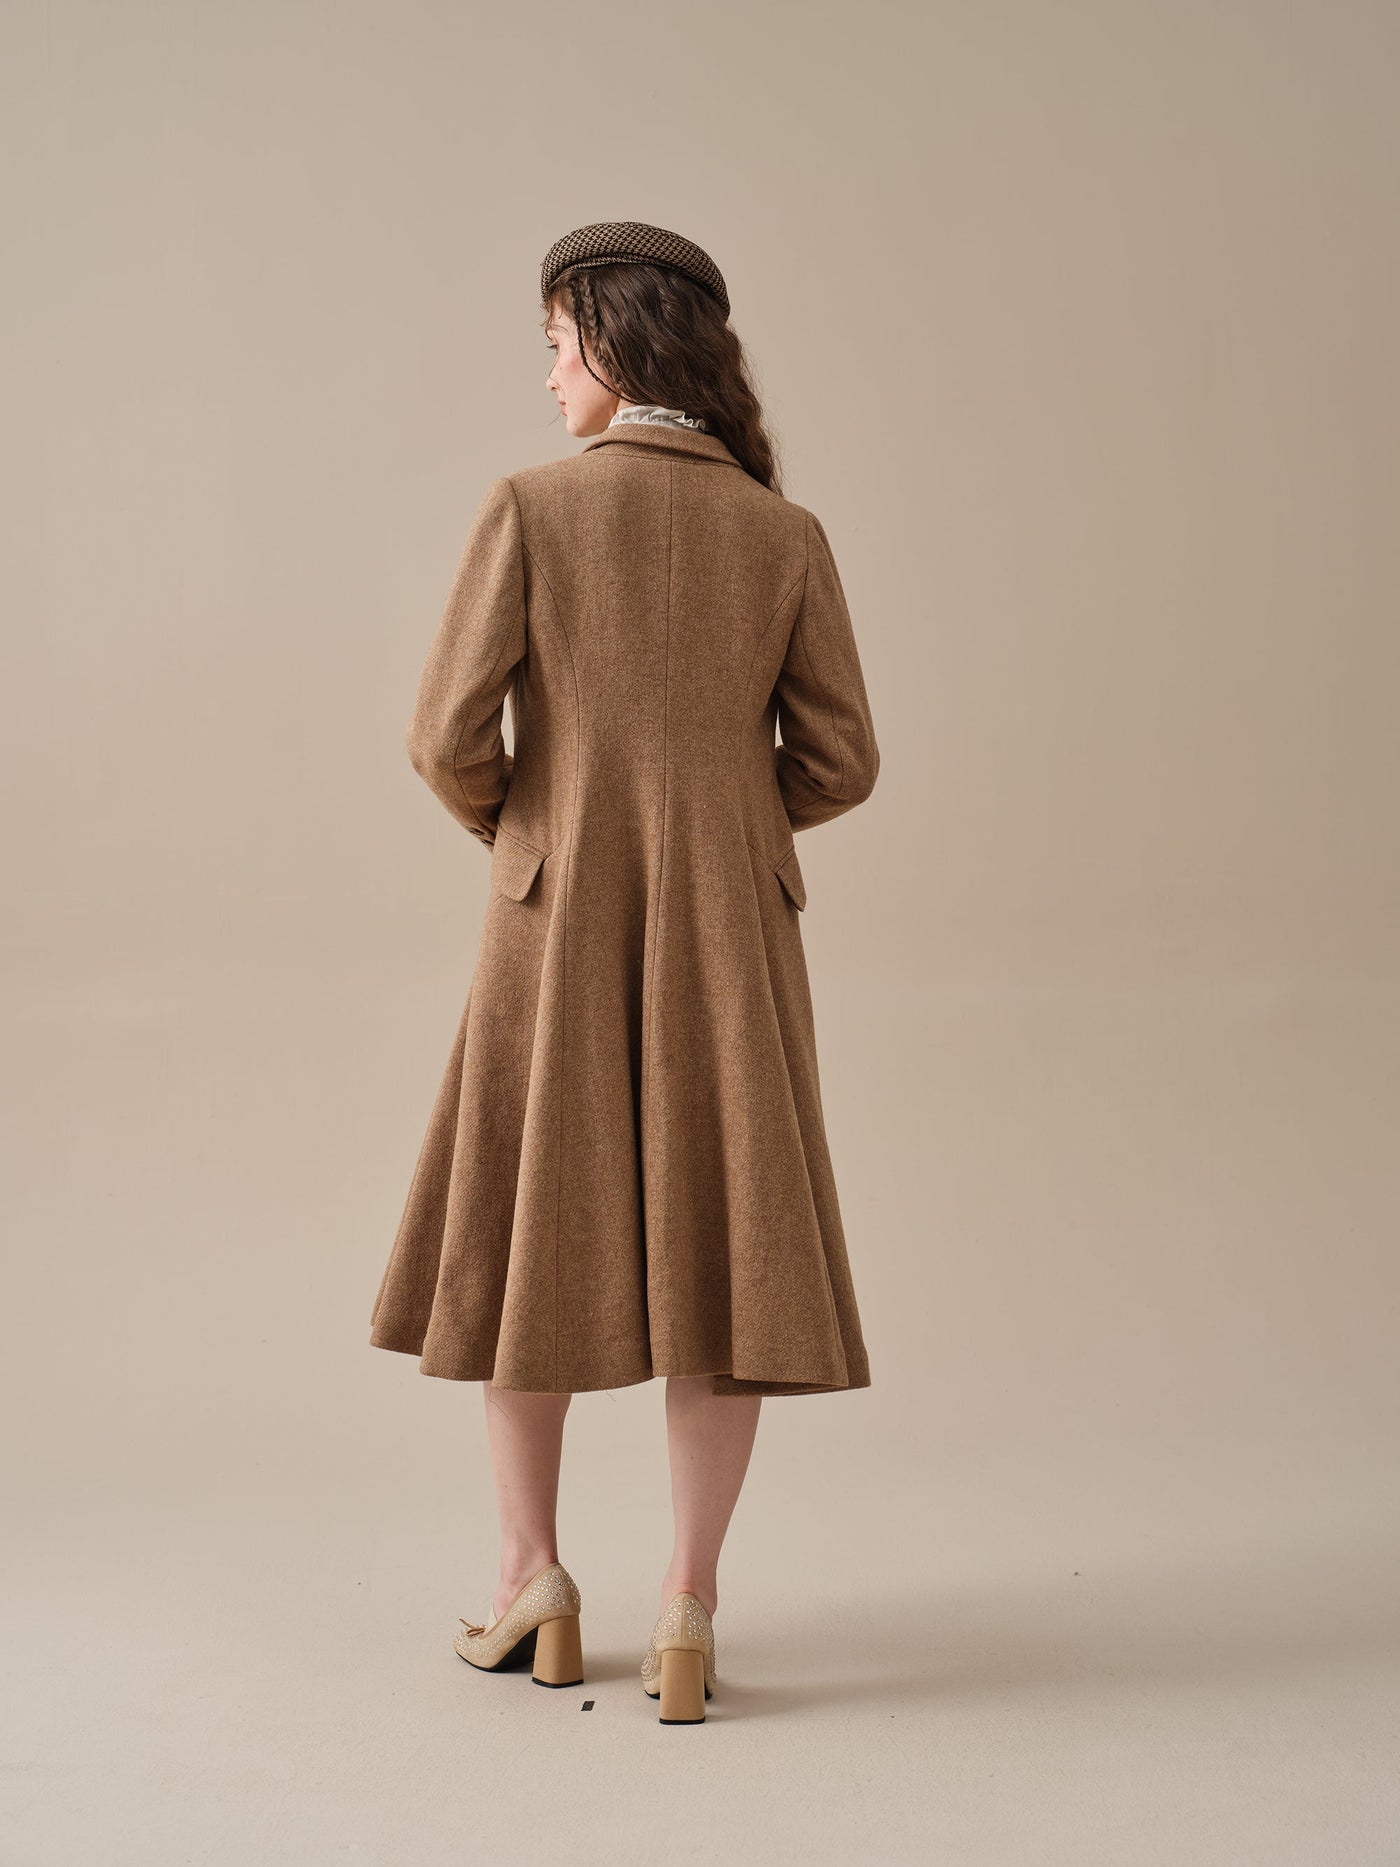 The Roman Holiday 17 | 100% wool classic coat